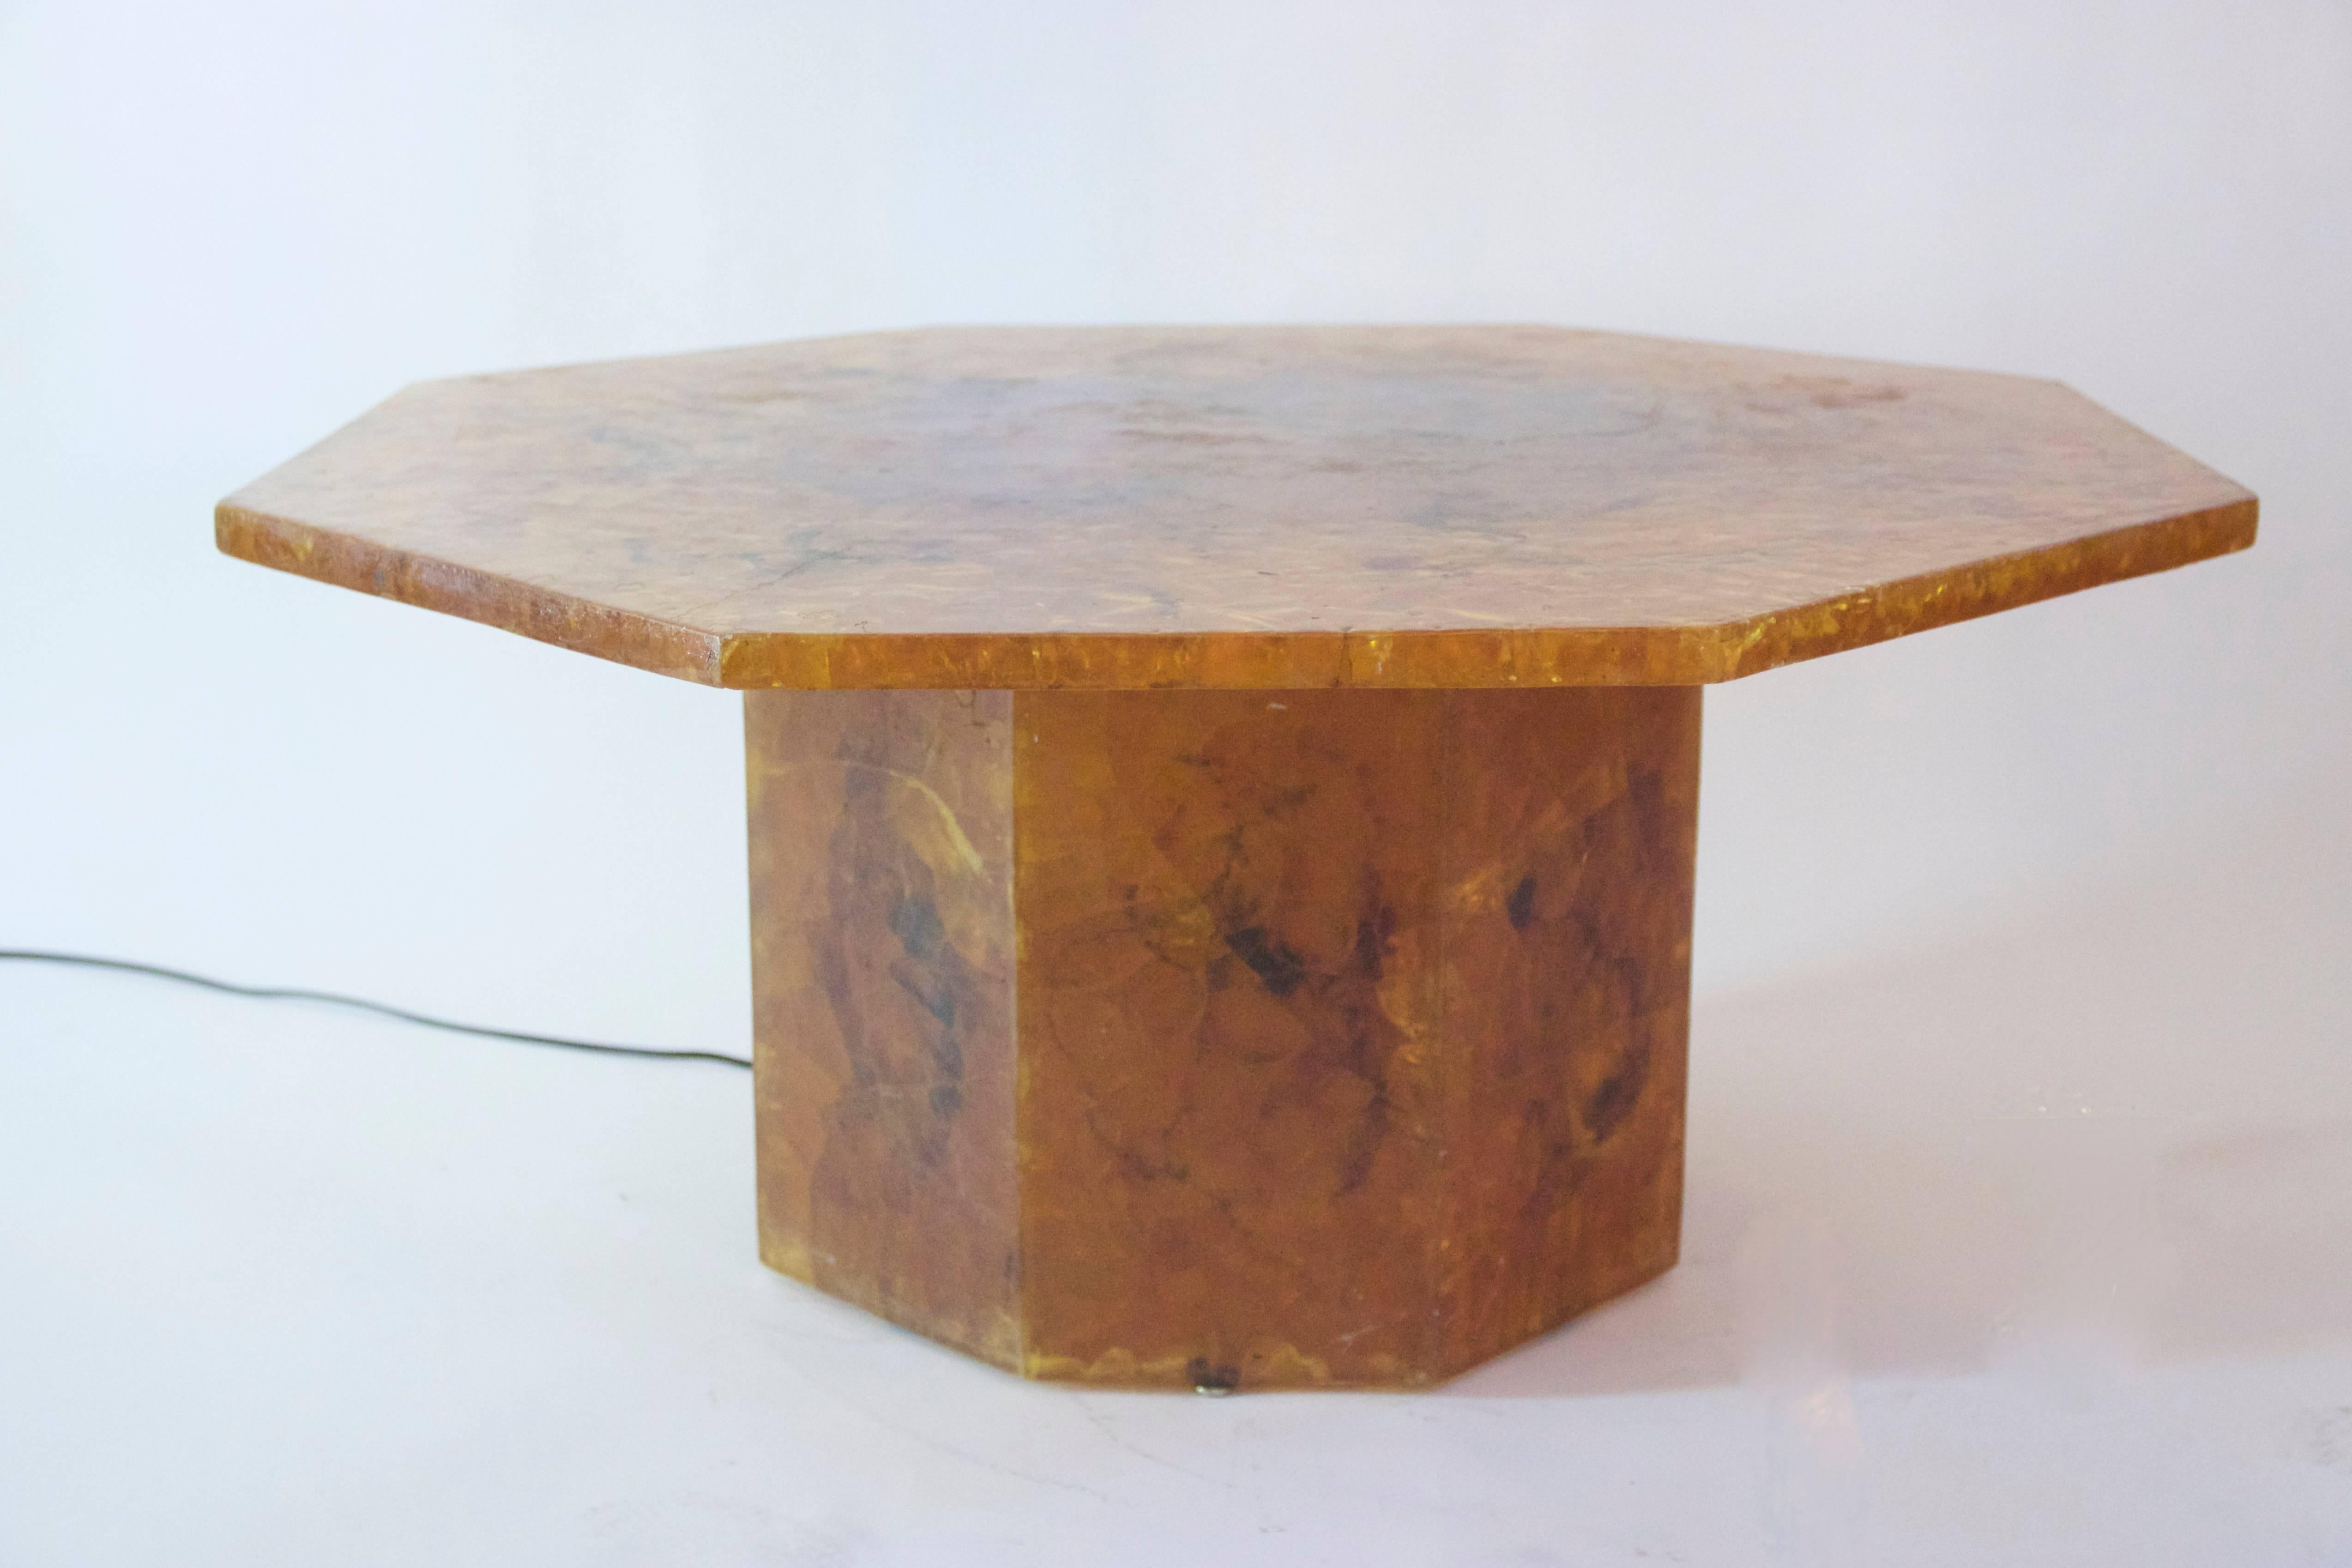 Accolay, illuminated coffee table,
resin,
circa 1970, France.
Measures: Height 40 cm, diameter 88 cm.